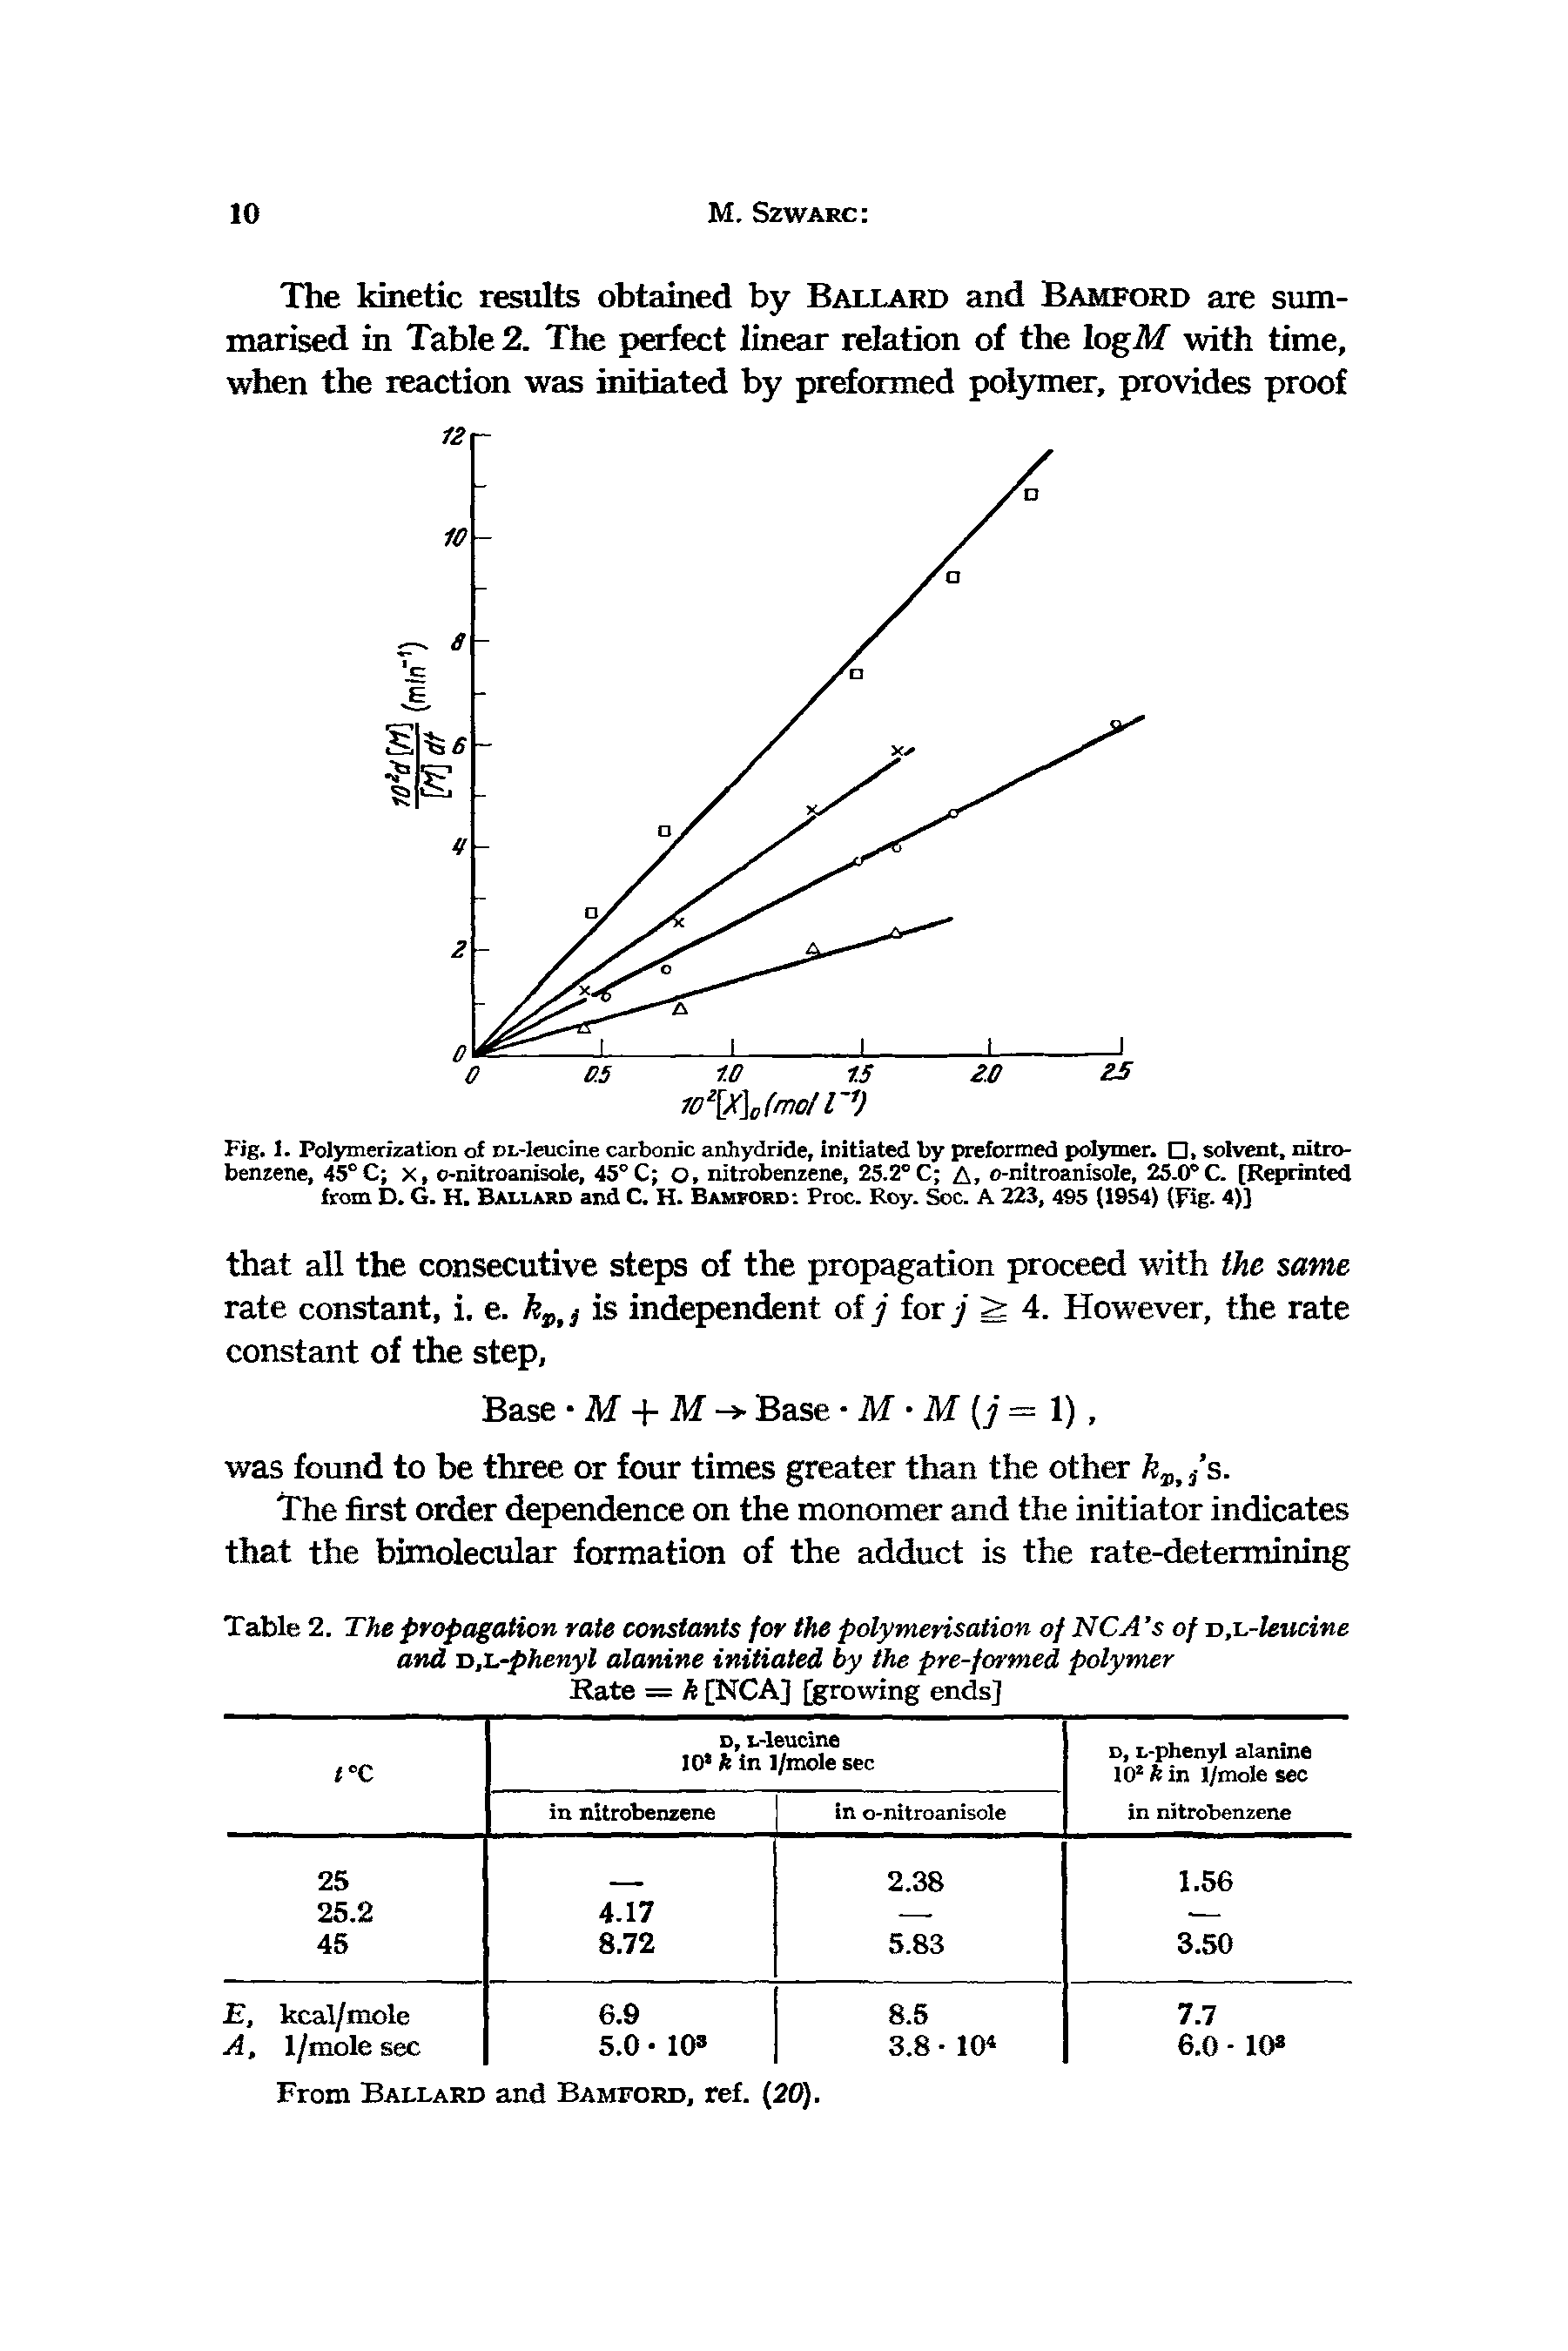 Fig. I. Polymerization of DL-leucine carbonic anhydride, initiated by preformed polymer. , solvent, nitrobenzene, 45°C X, o-nitroanisole, 45° C O, nitrobenzene, 25.2° C A, o-nitroanisole, 25.0 C. [Reprinted from D. G. H. Ballard and C. H. Bamford Proc. Roy. See. A 223, 495 (1954) (Fig- 4)]...